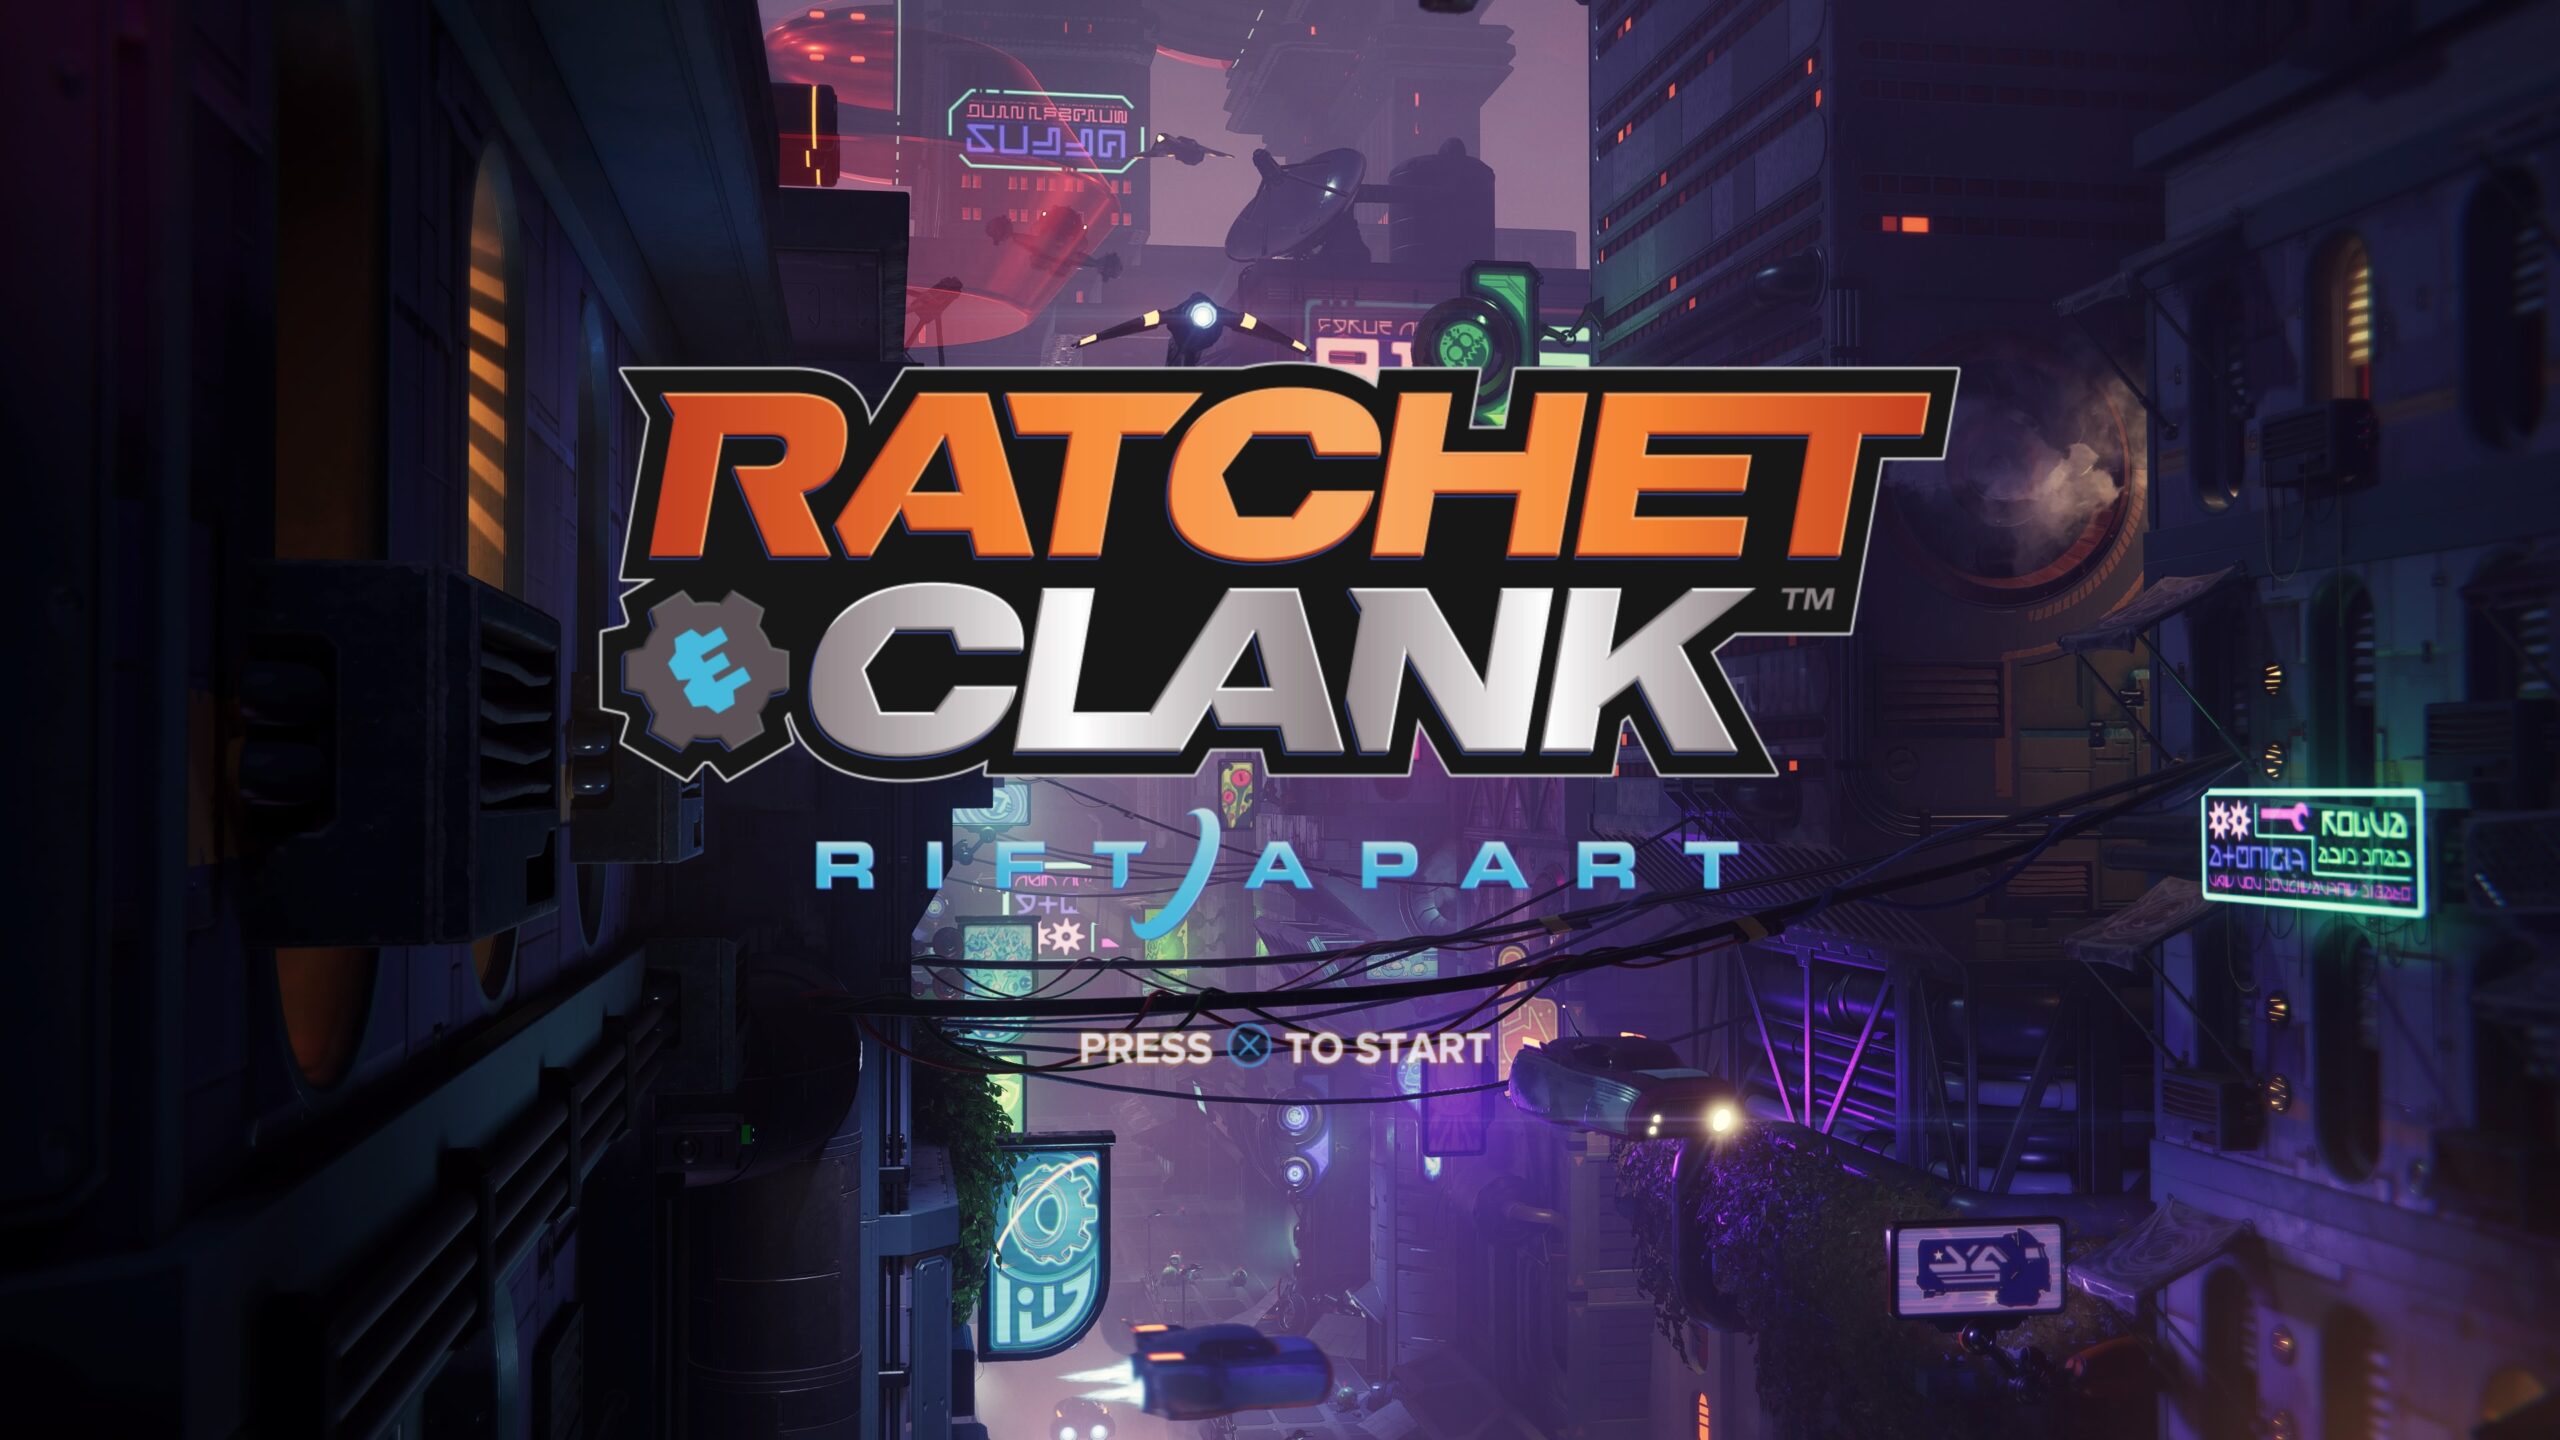 Ratchet & Clank: Rift Apart review